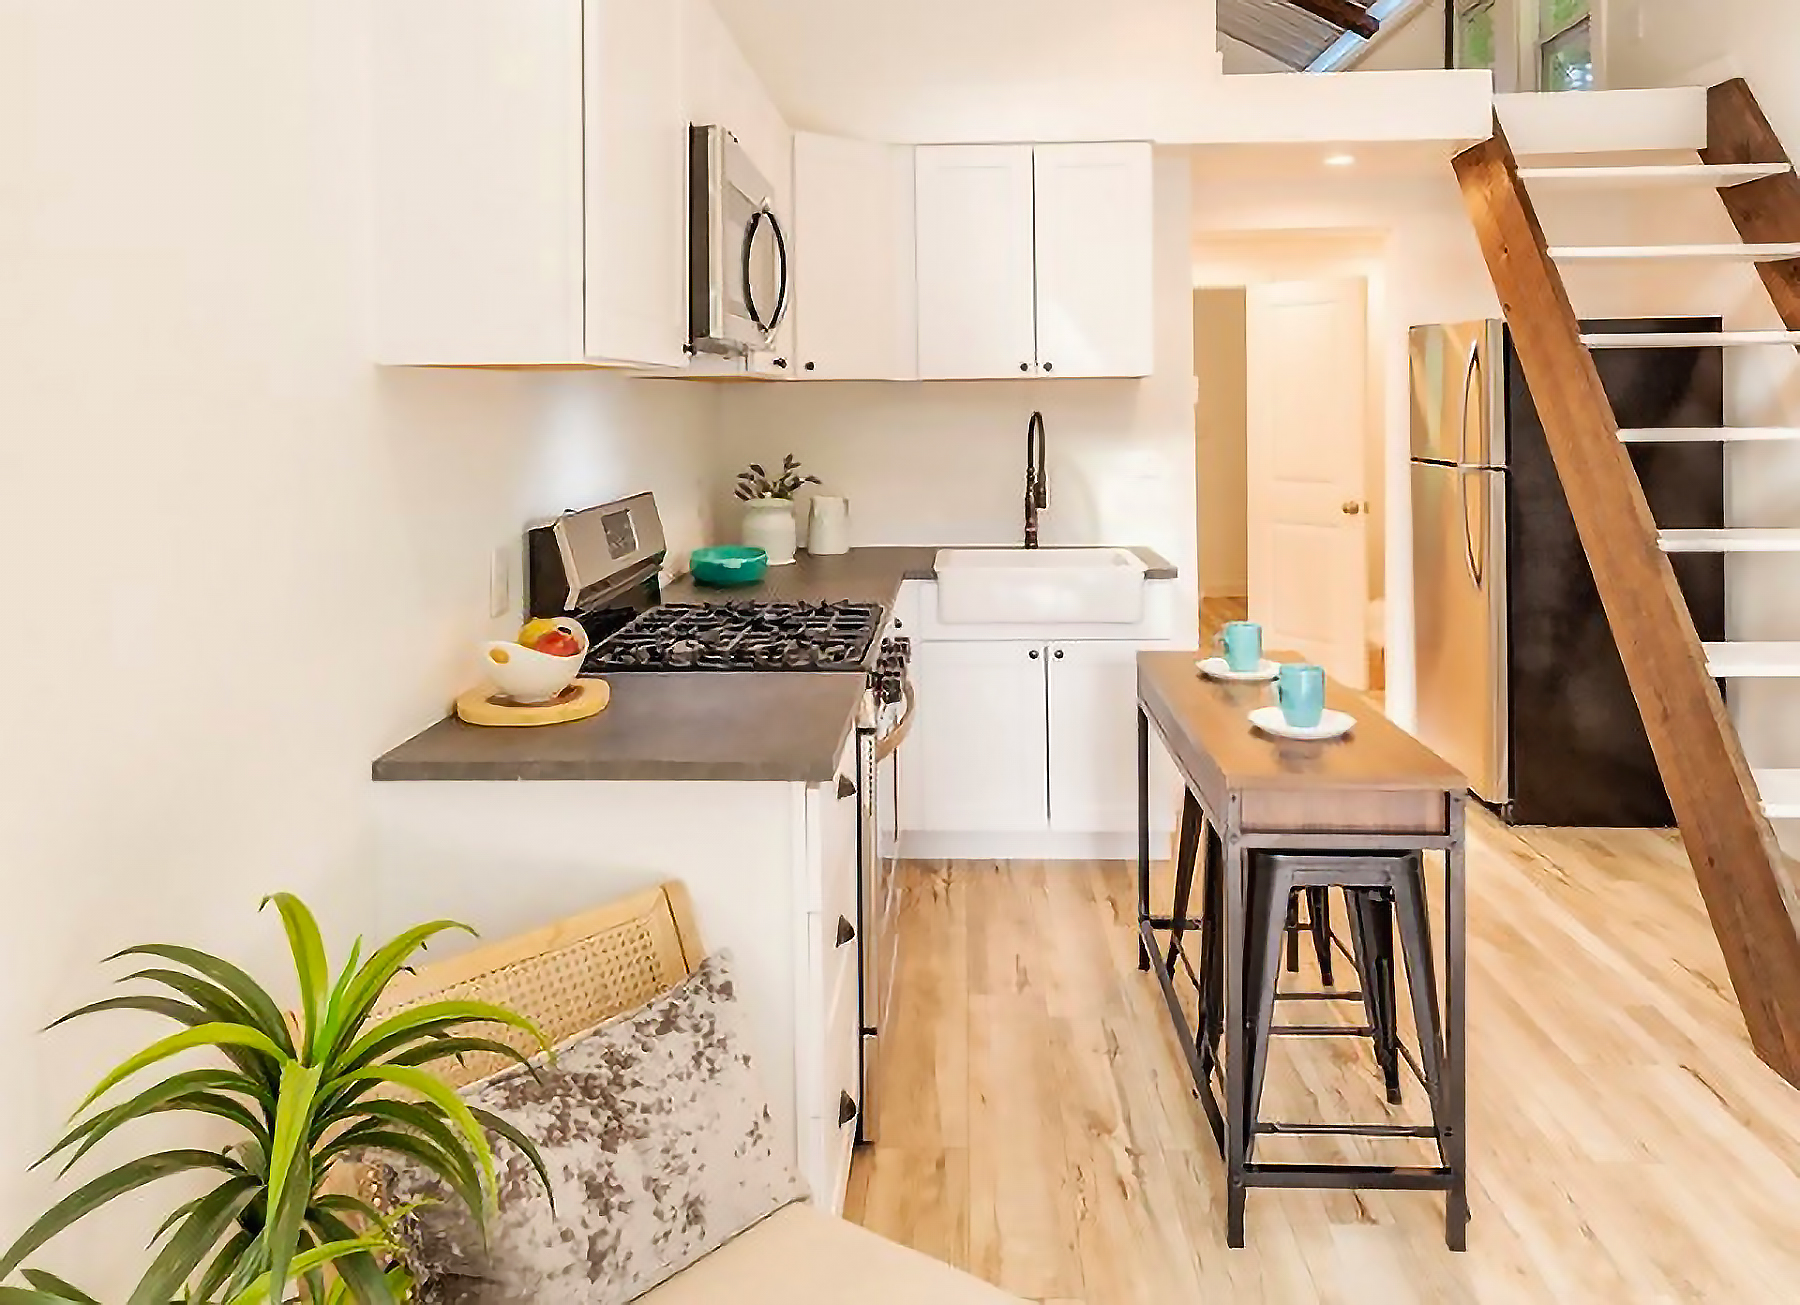 Tiny home interior kitchen